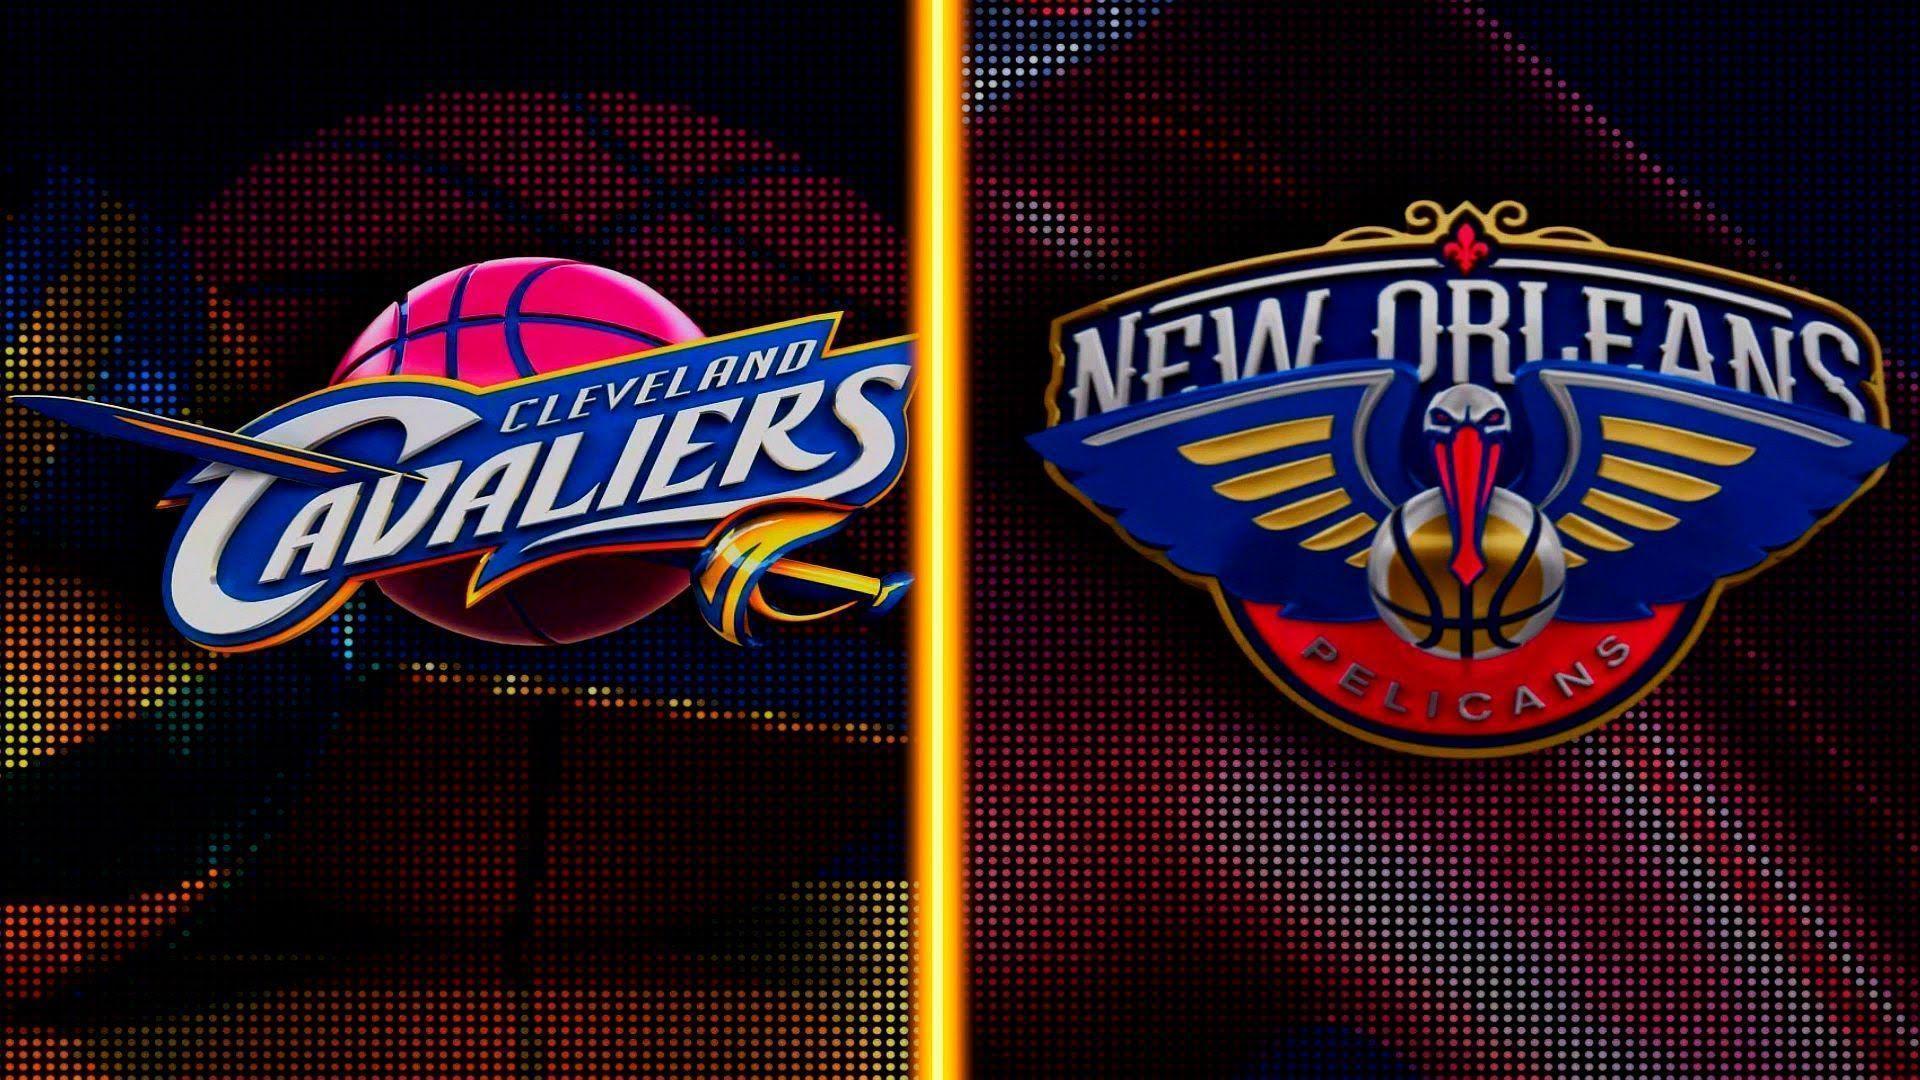 PS4: NBA 2K16 Cavaliers vs. New Orleans Pelicans